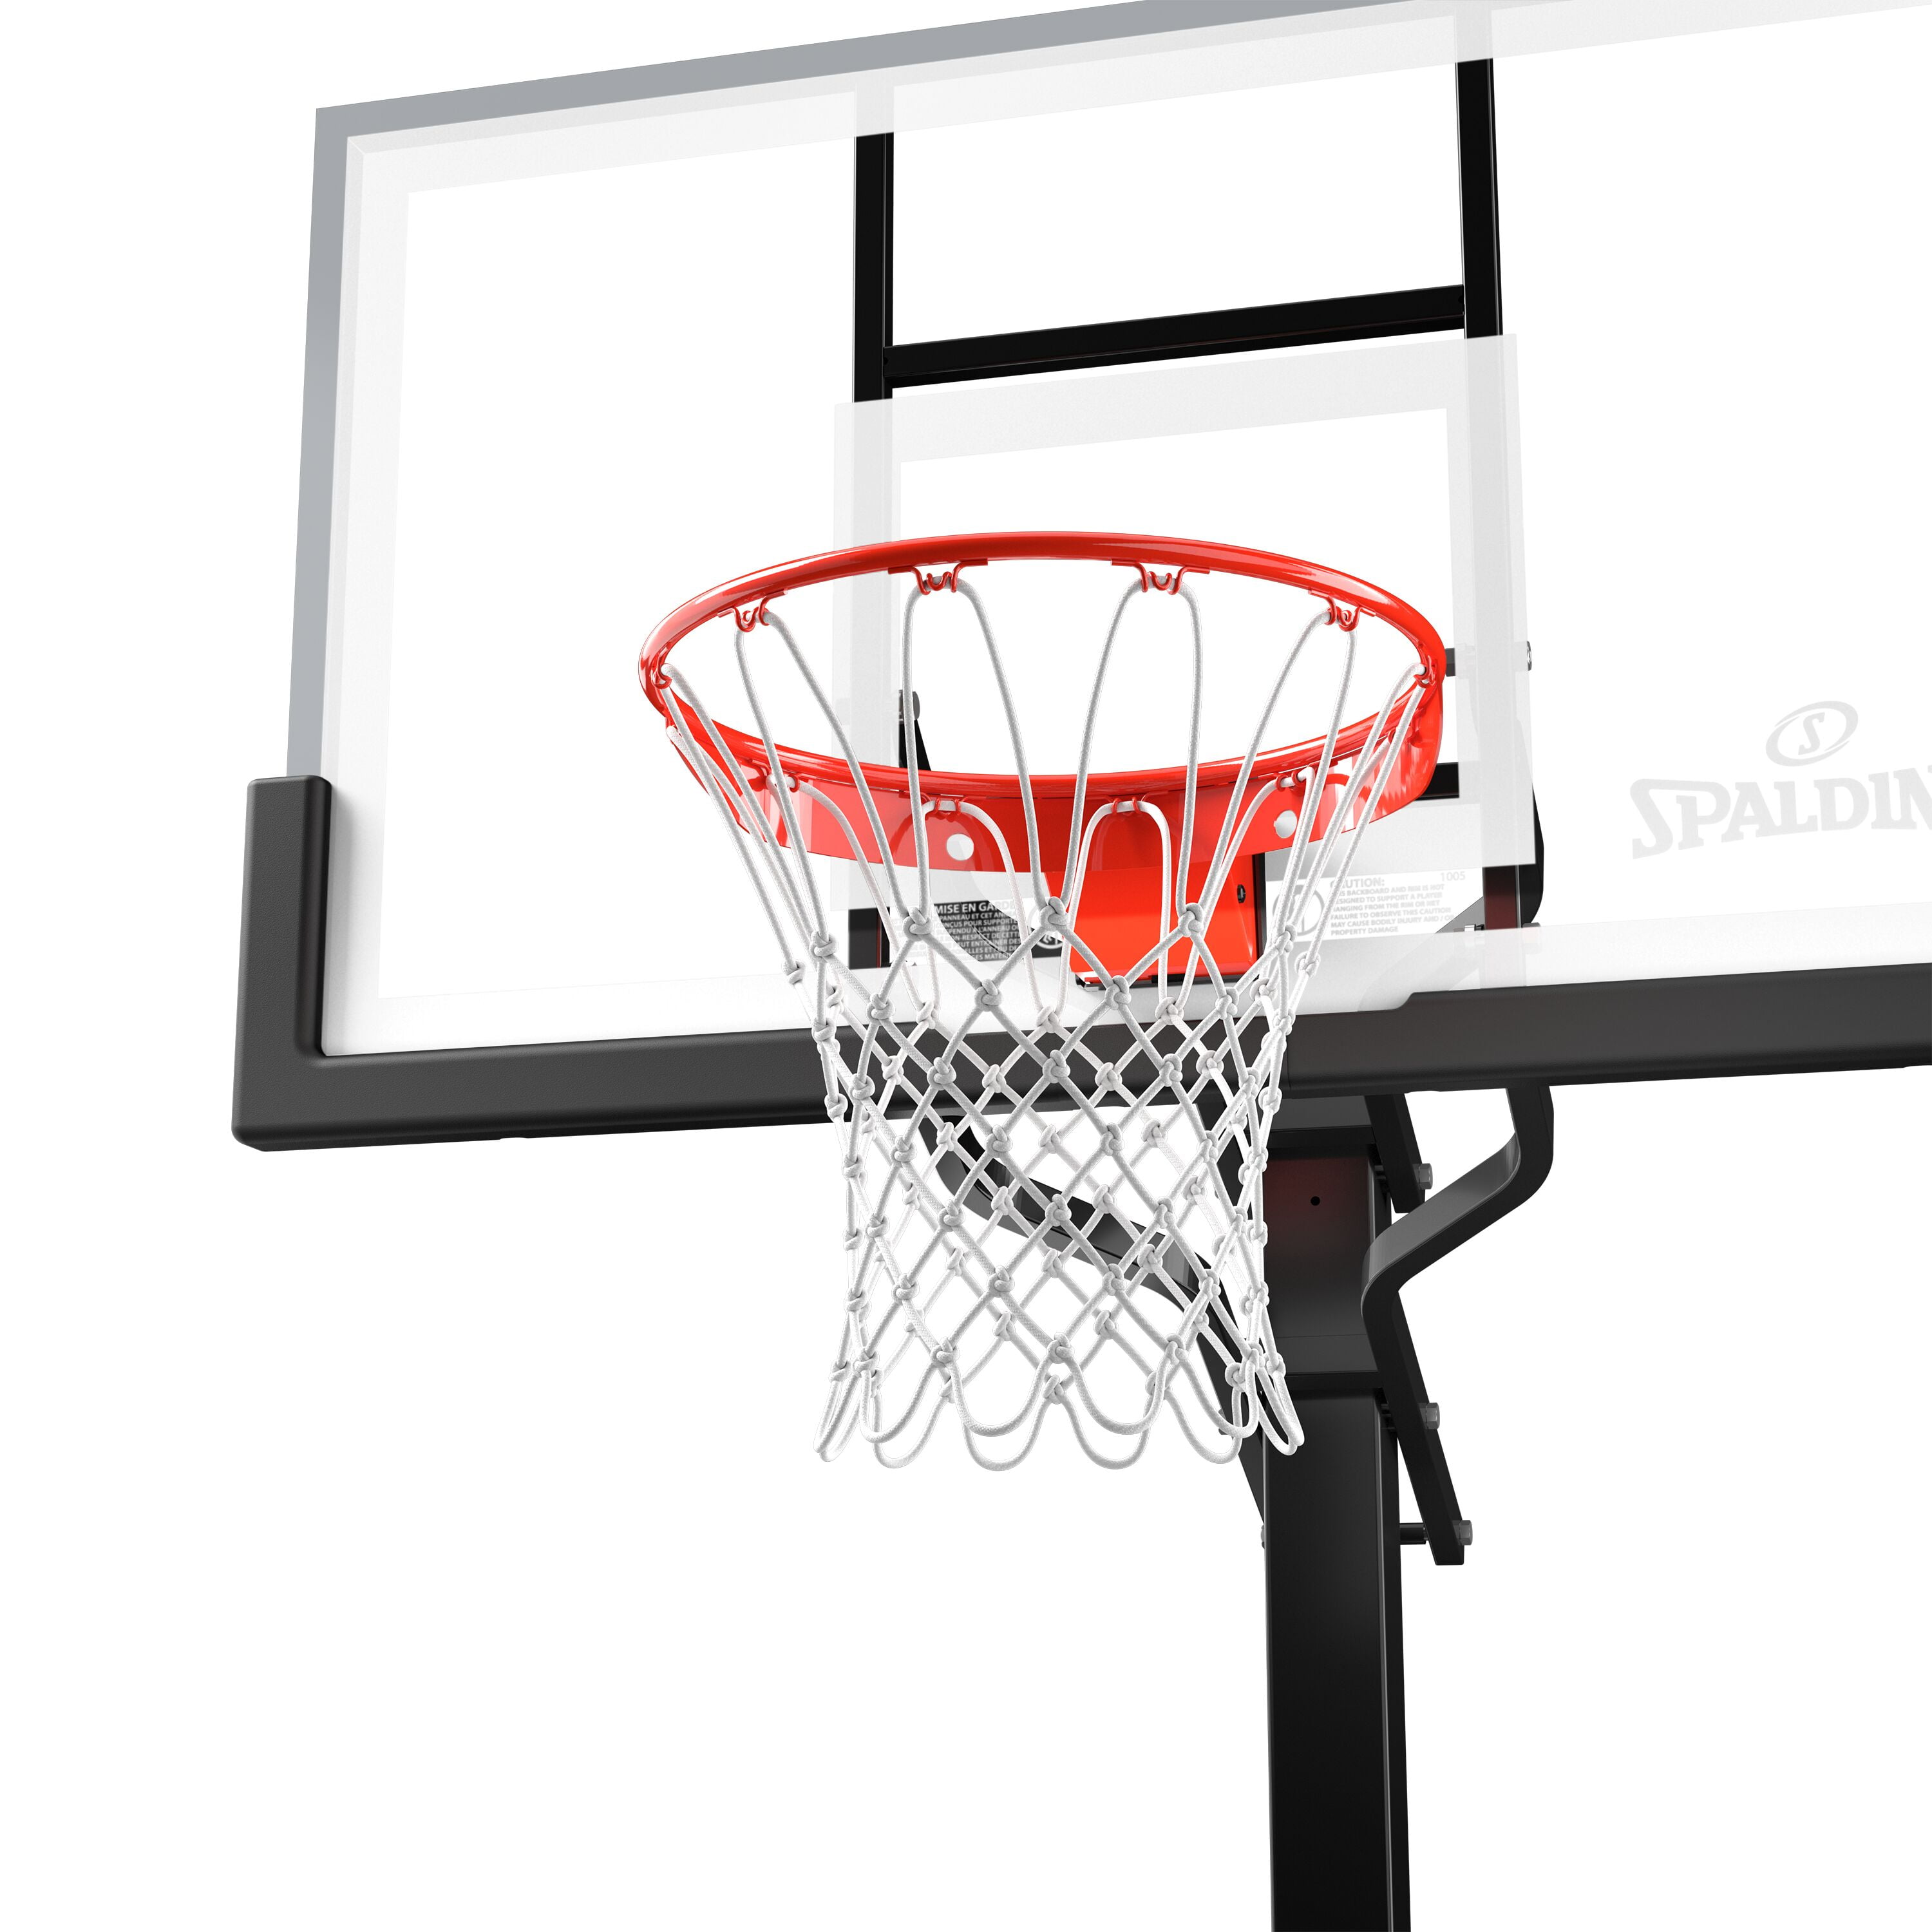 Spalding Hybrid 54 in Portable Basketball Hoop